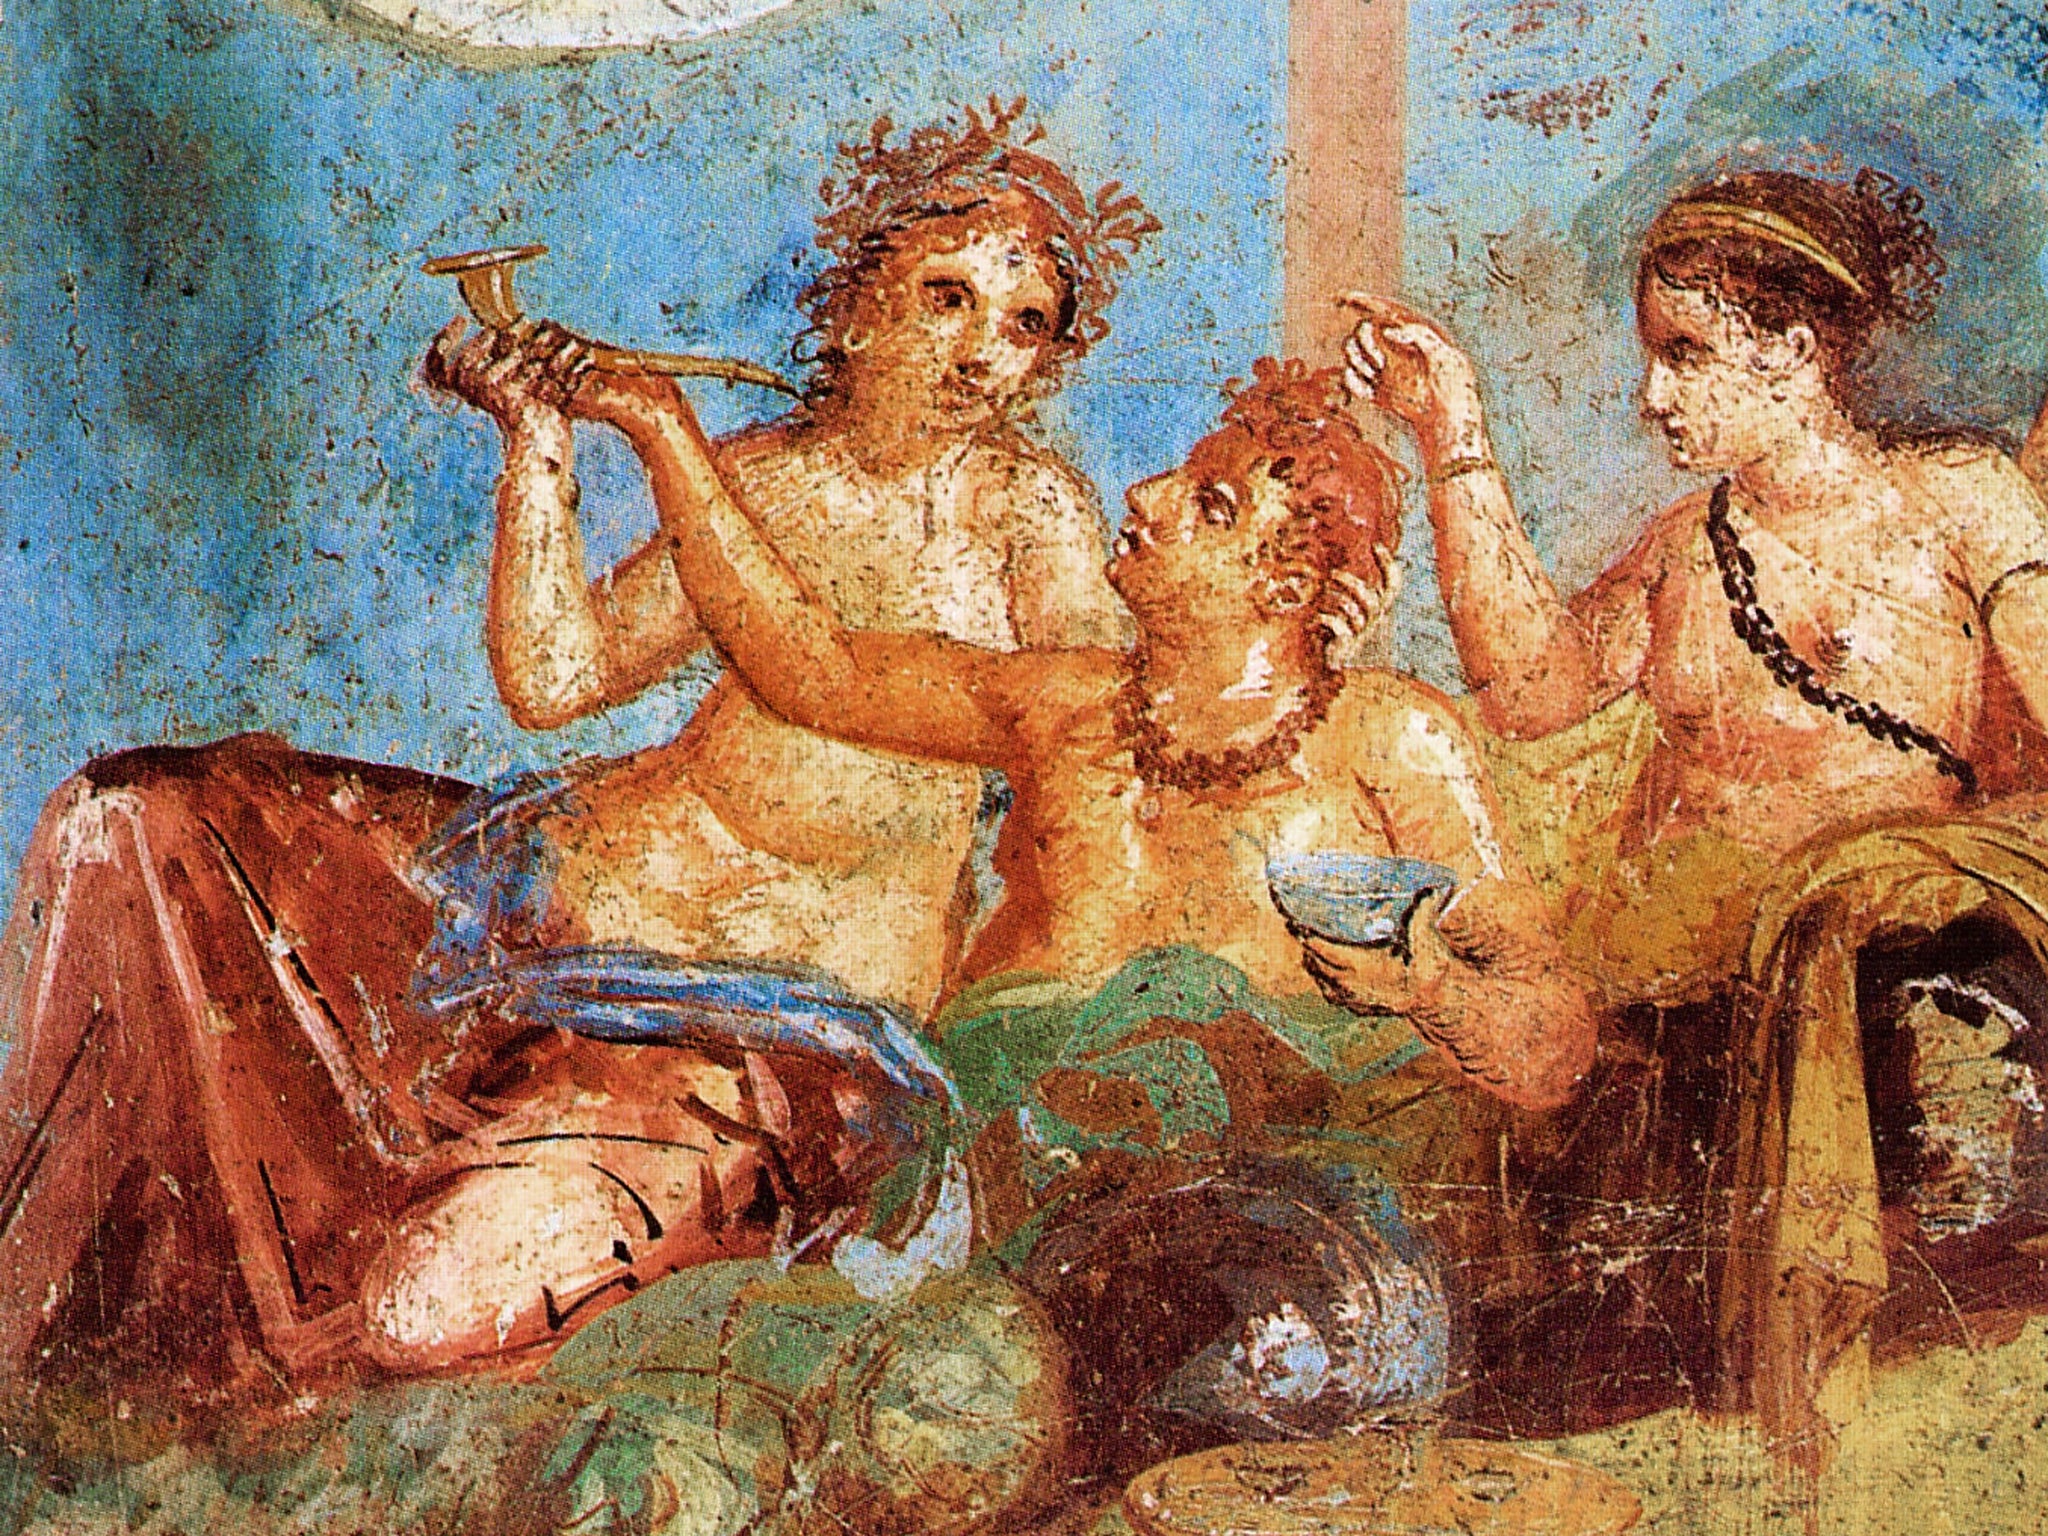 A Roman banquet depicts ancient eating habits